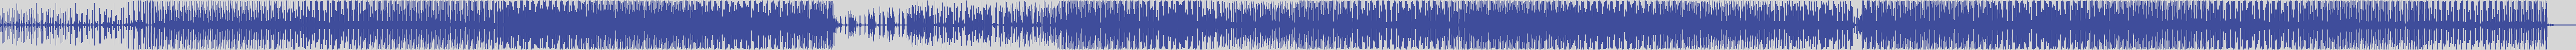 atomic_recordings [AR020] Teo Manco - Pequeche [Original Mix] audio wave form